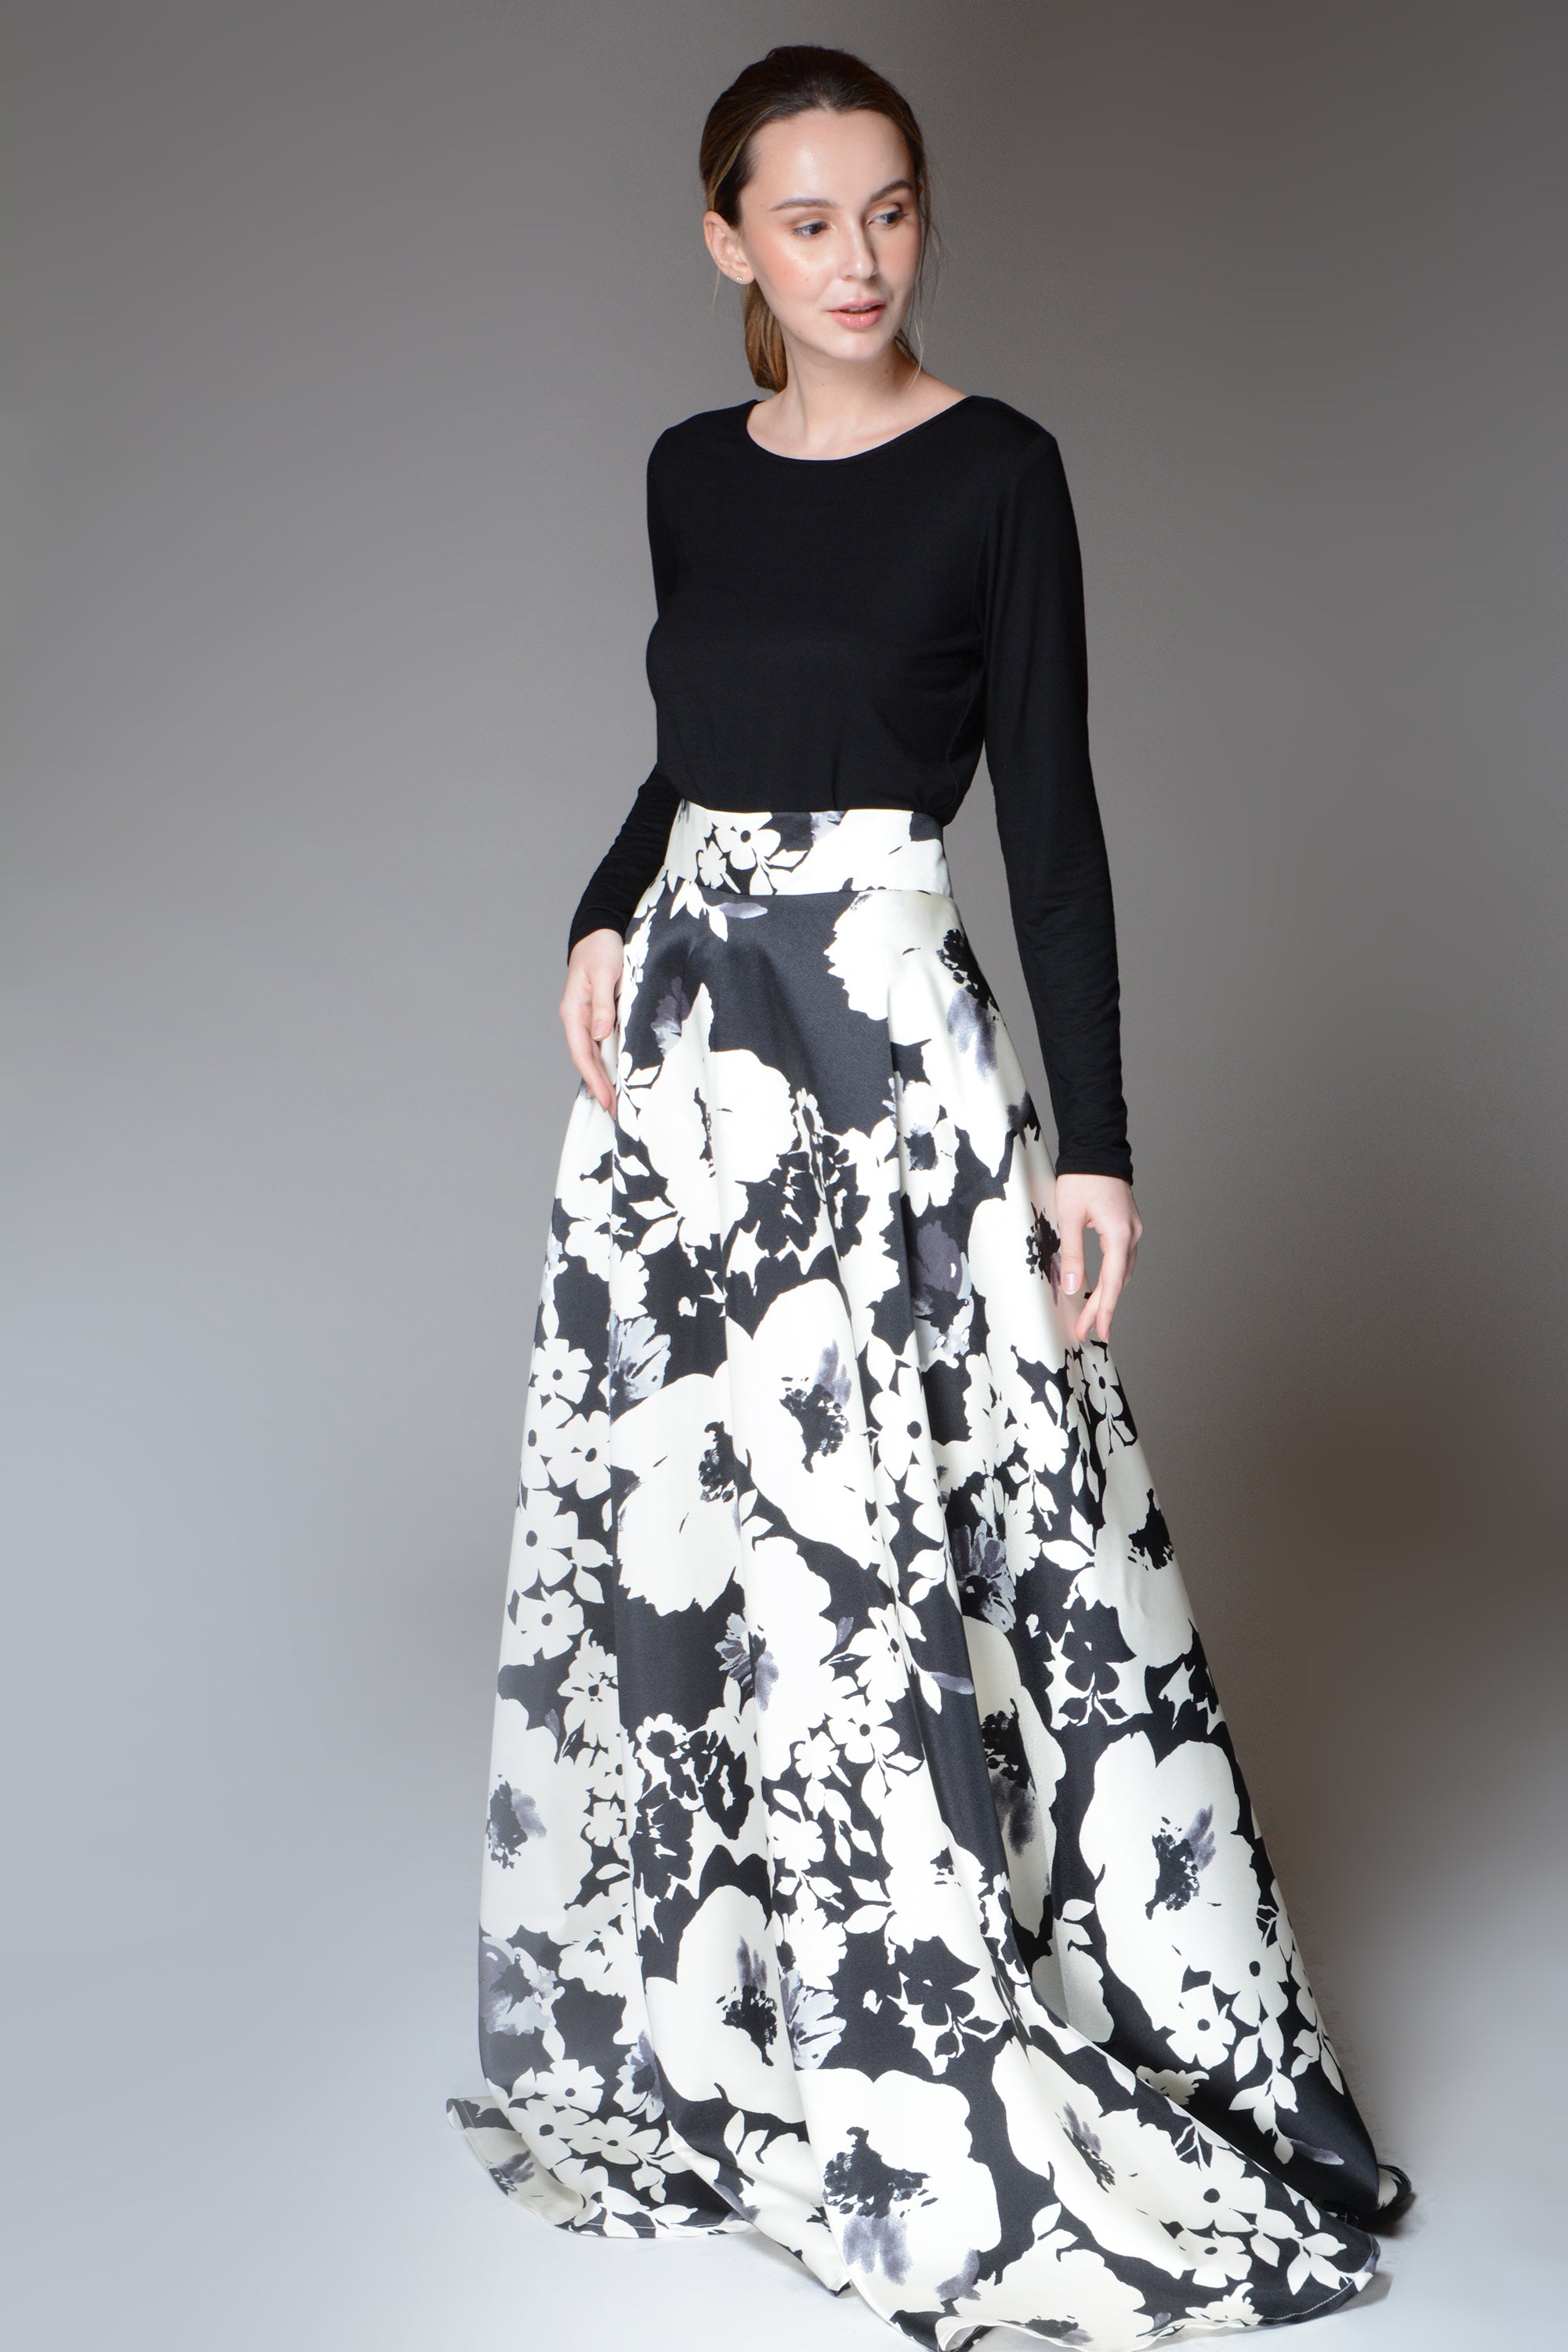 BENNET Painterly Floral Ball Skirt - HEMLOCK CLOTHING